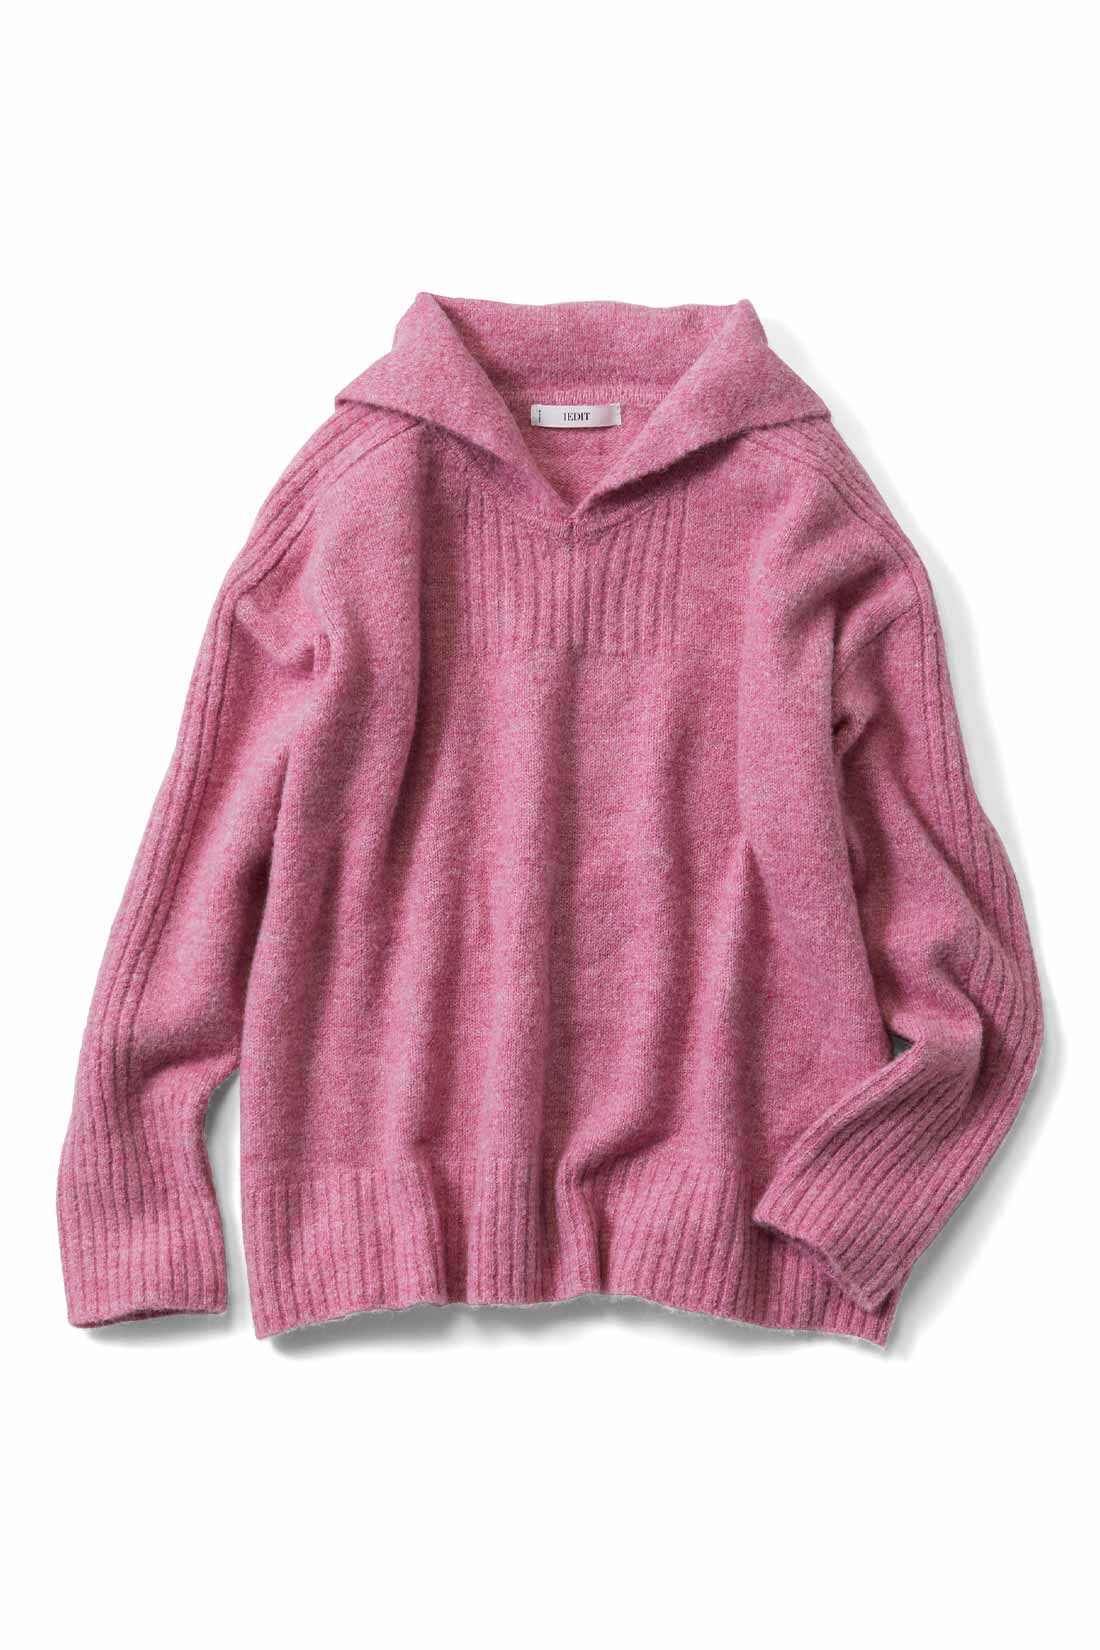 IEDIT[イディット]　マシンウォッシャブルのウール混素材がうれしい 編み柄がアクセントになったセーラーカラーニット〈ピンク〉|〈ピンク〉